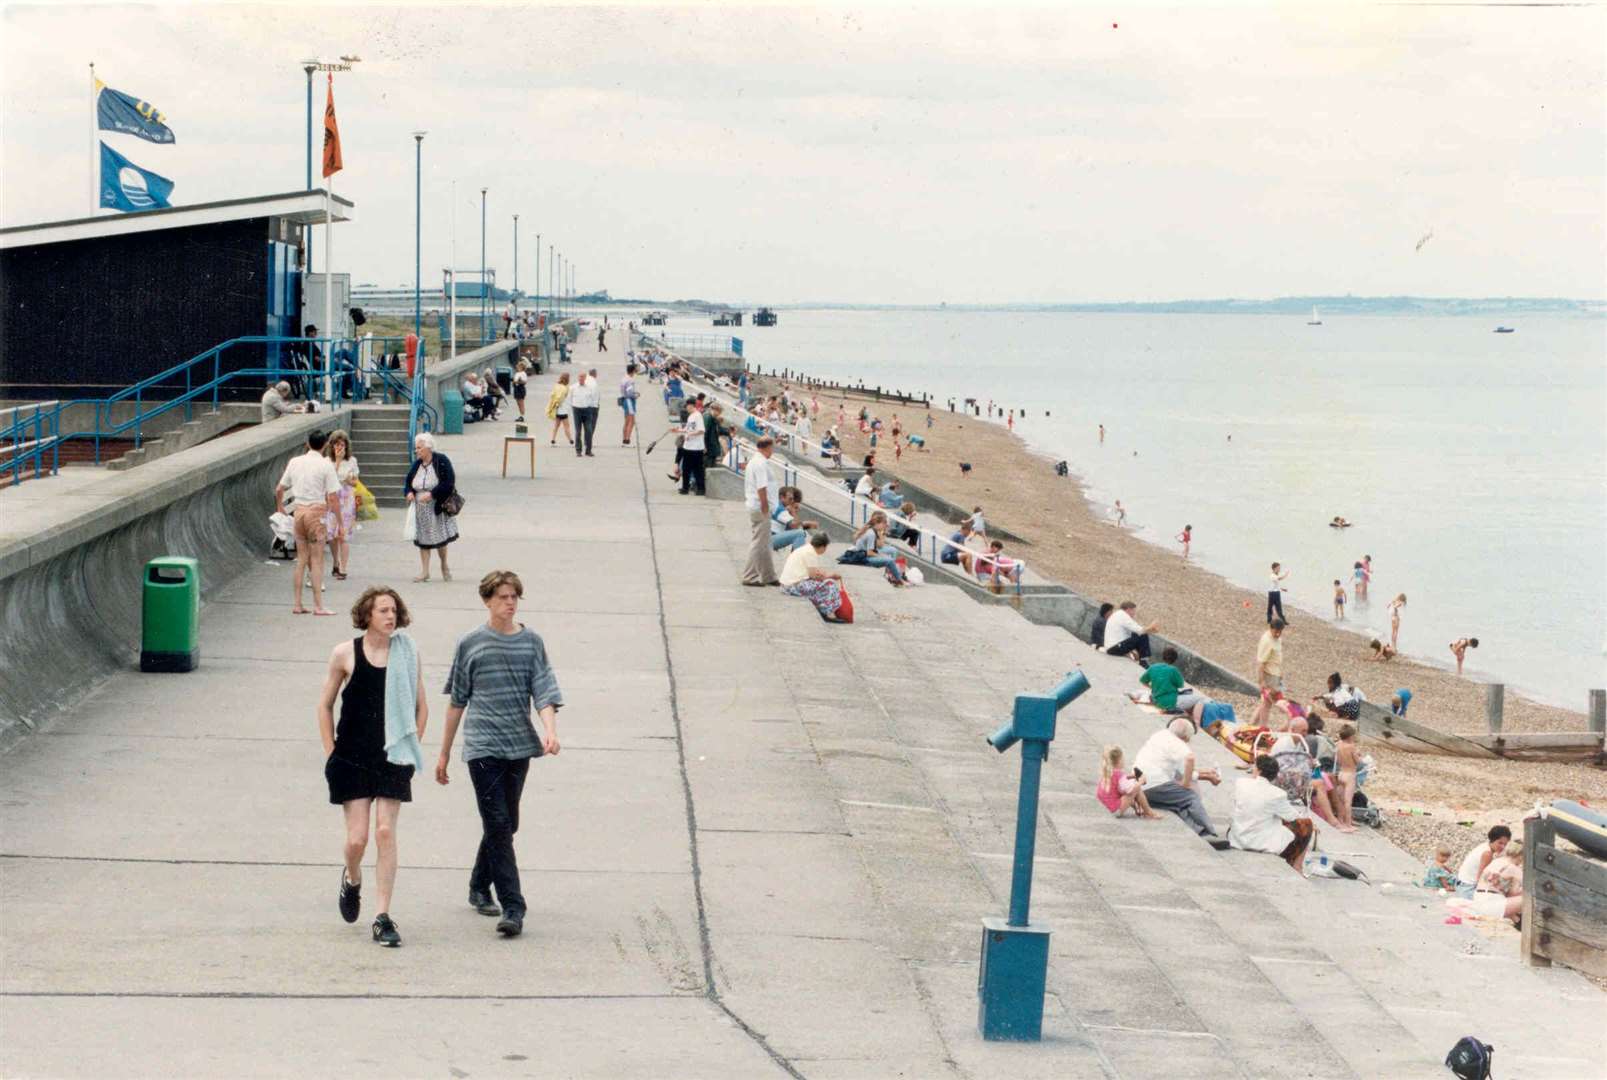 Sheerness promenade in 1993